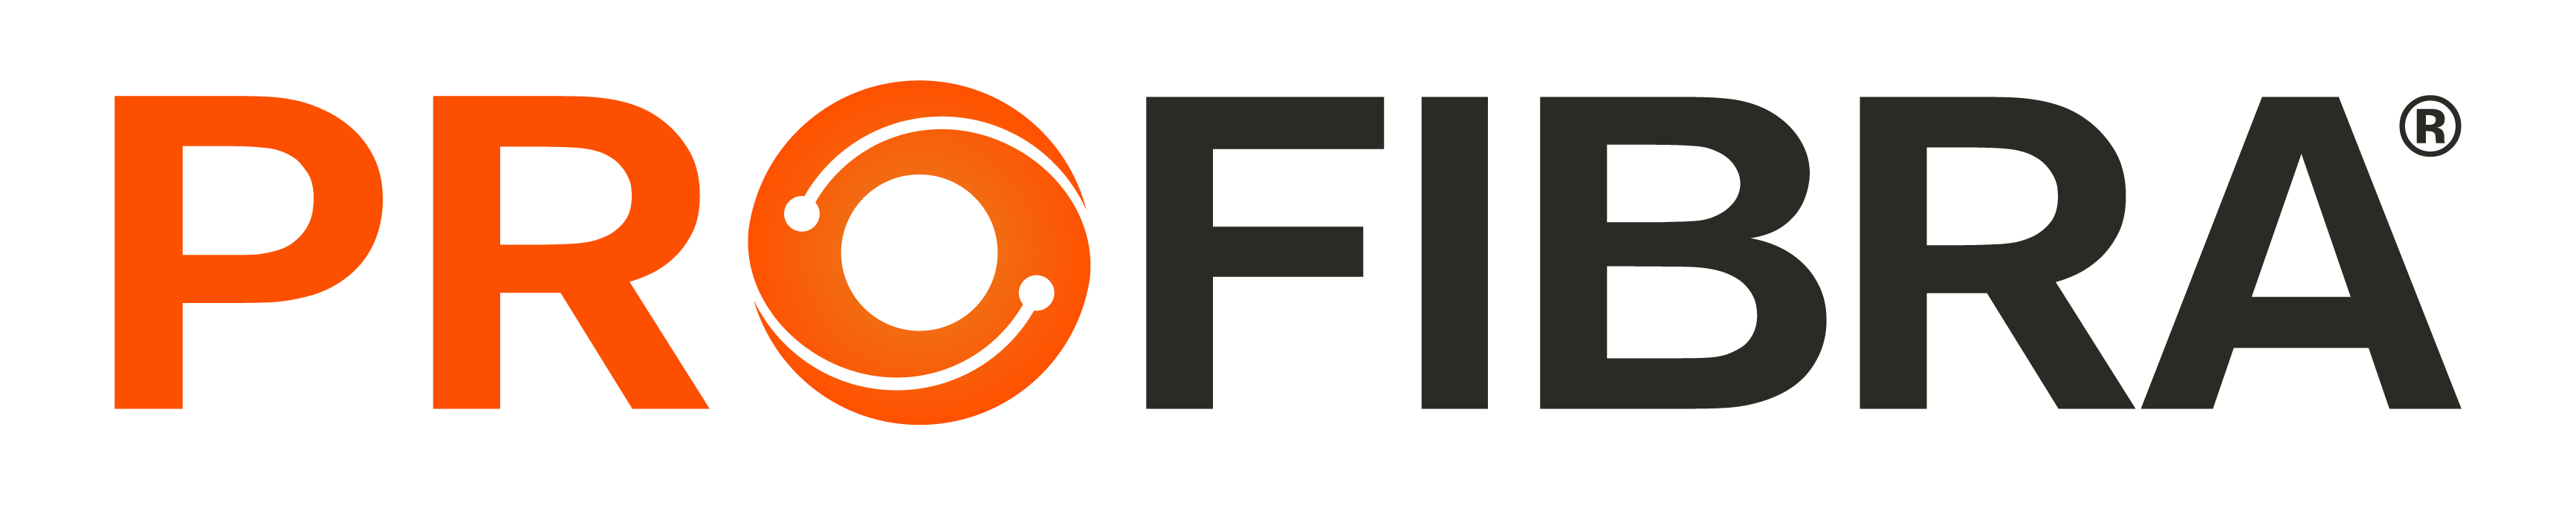 profibra logo horizontal narnja y negro 